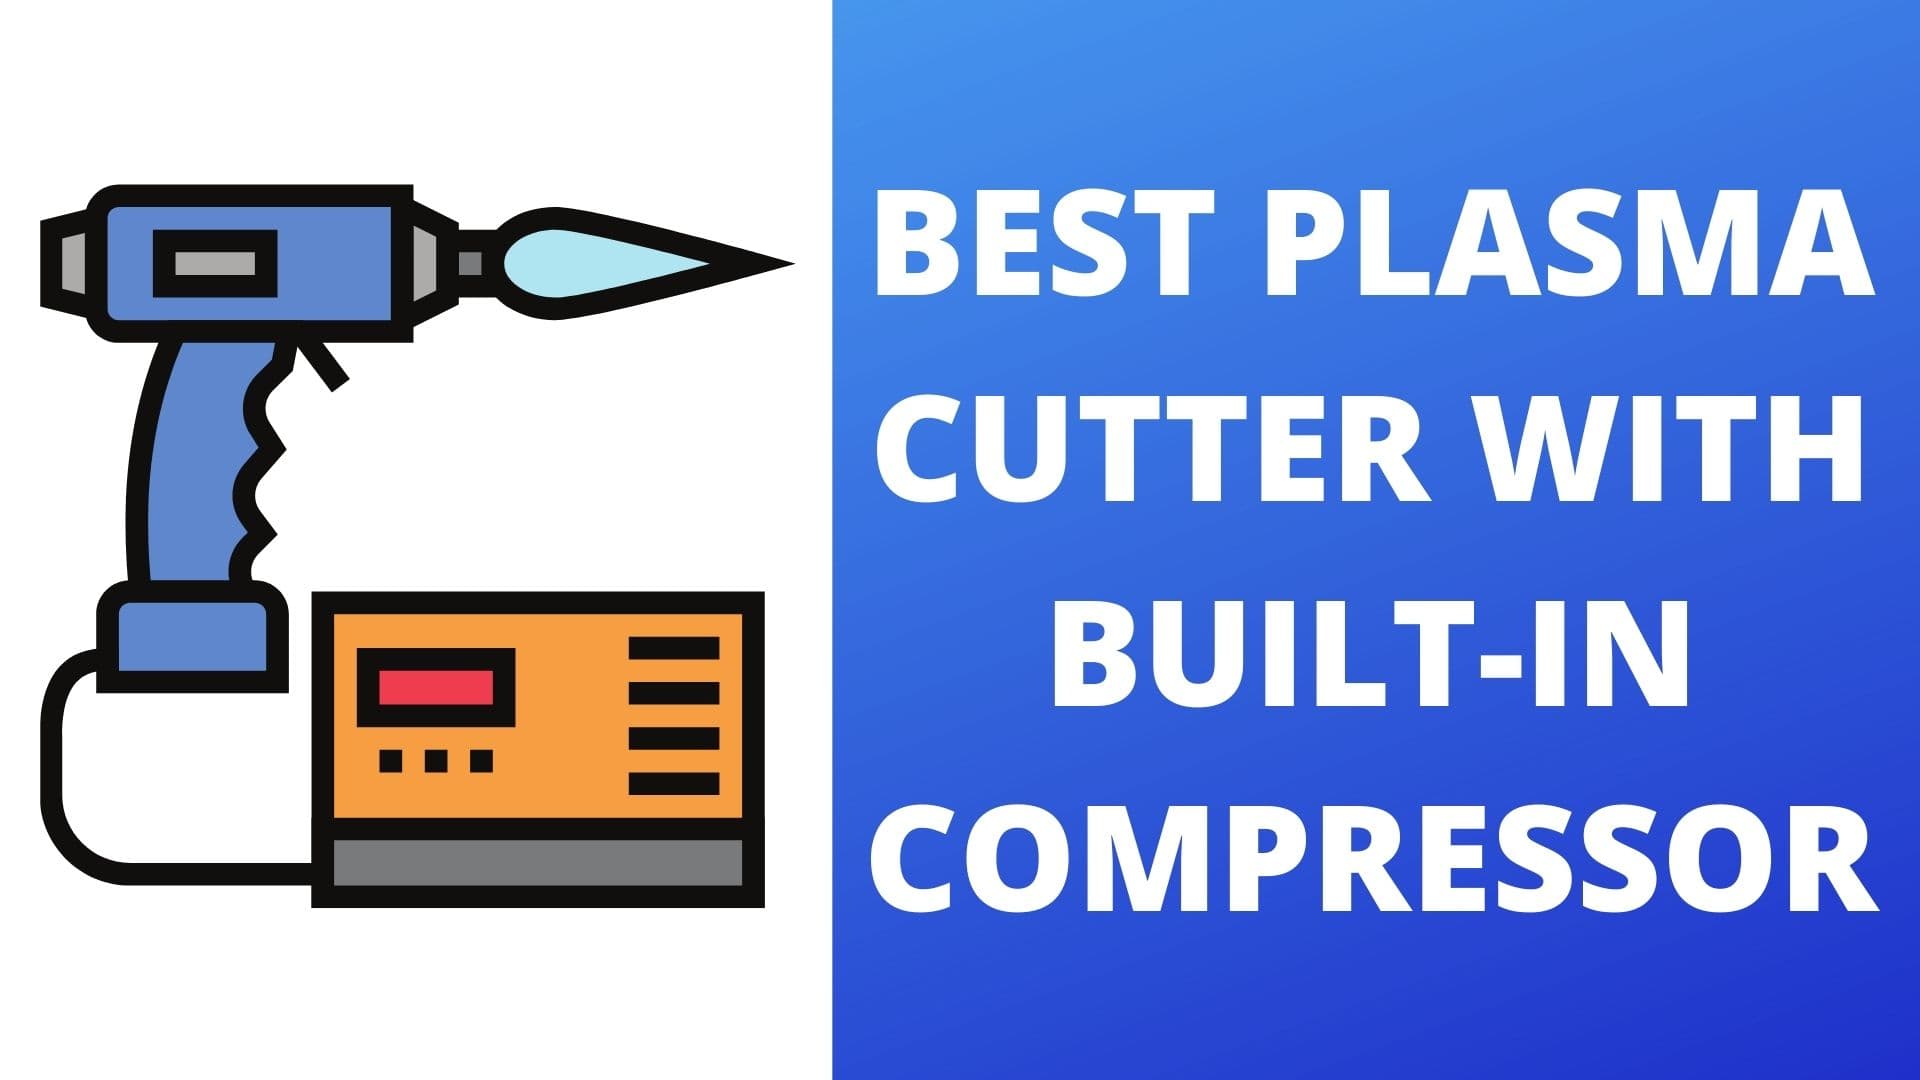 Best plasma cutter with built-in compressor